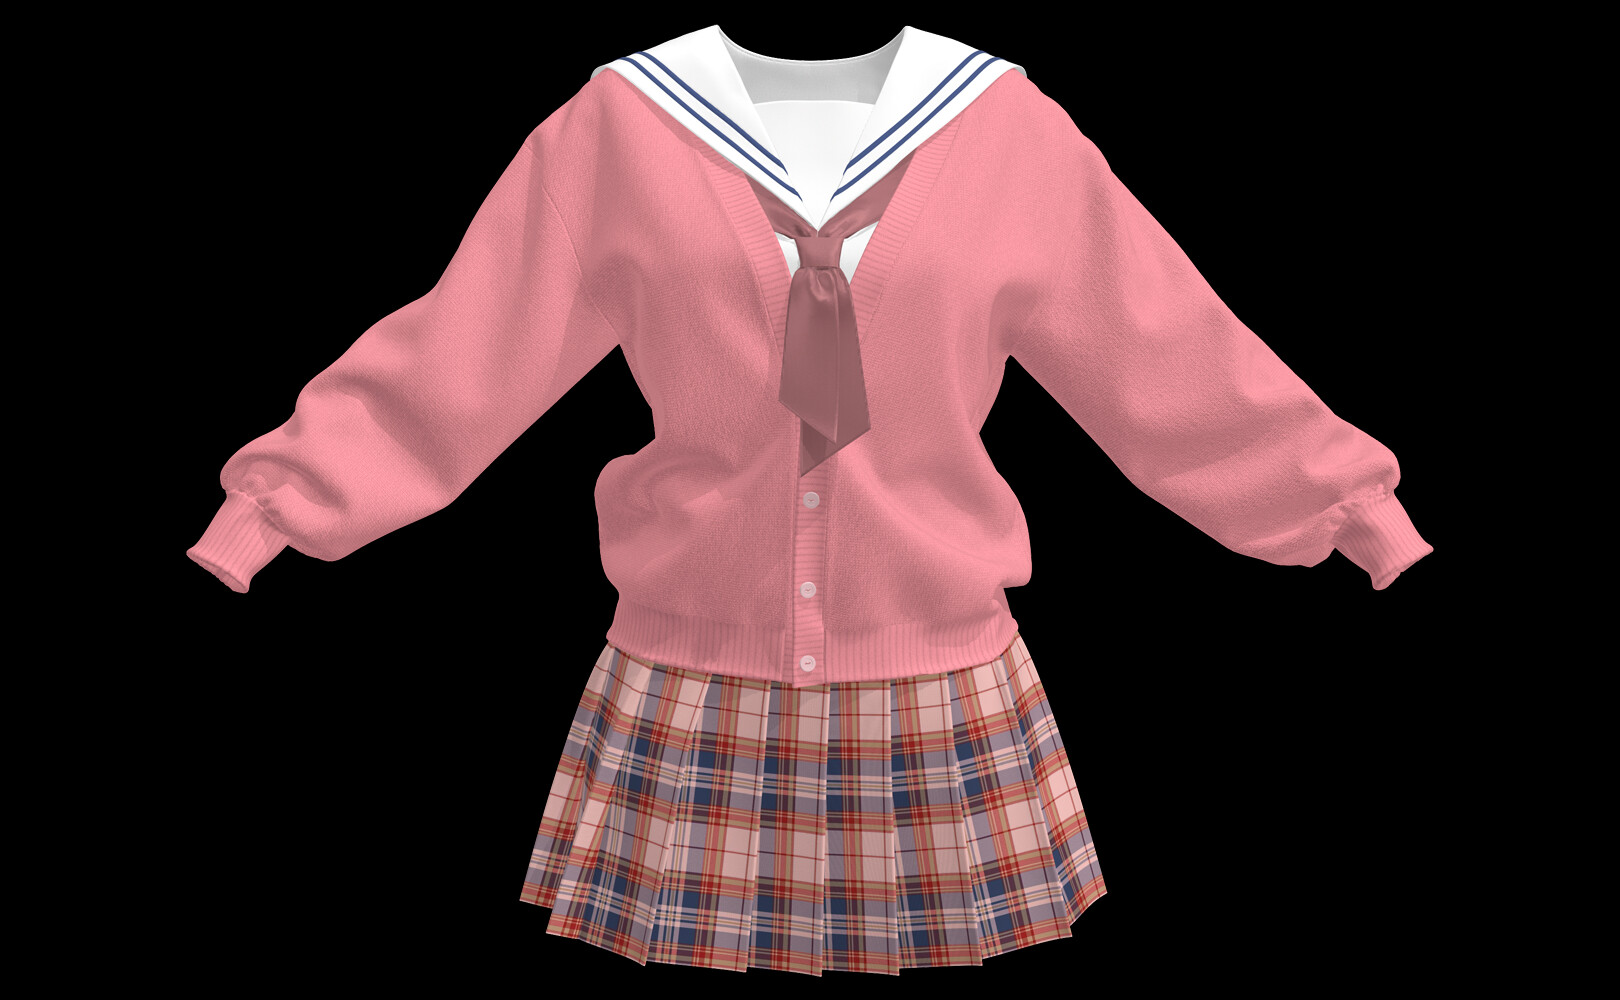 ArtStation - Japan school uniform with cardigan. MD, Clo3d project ...